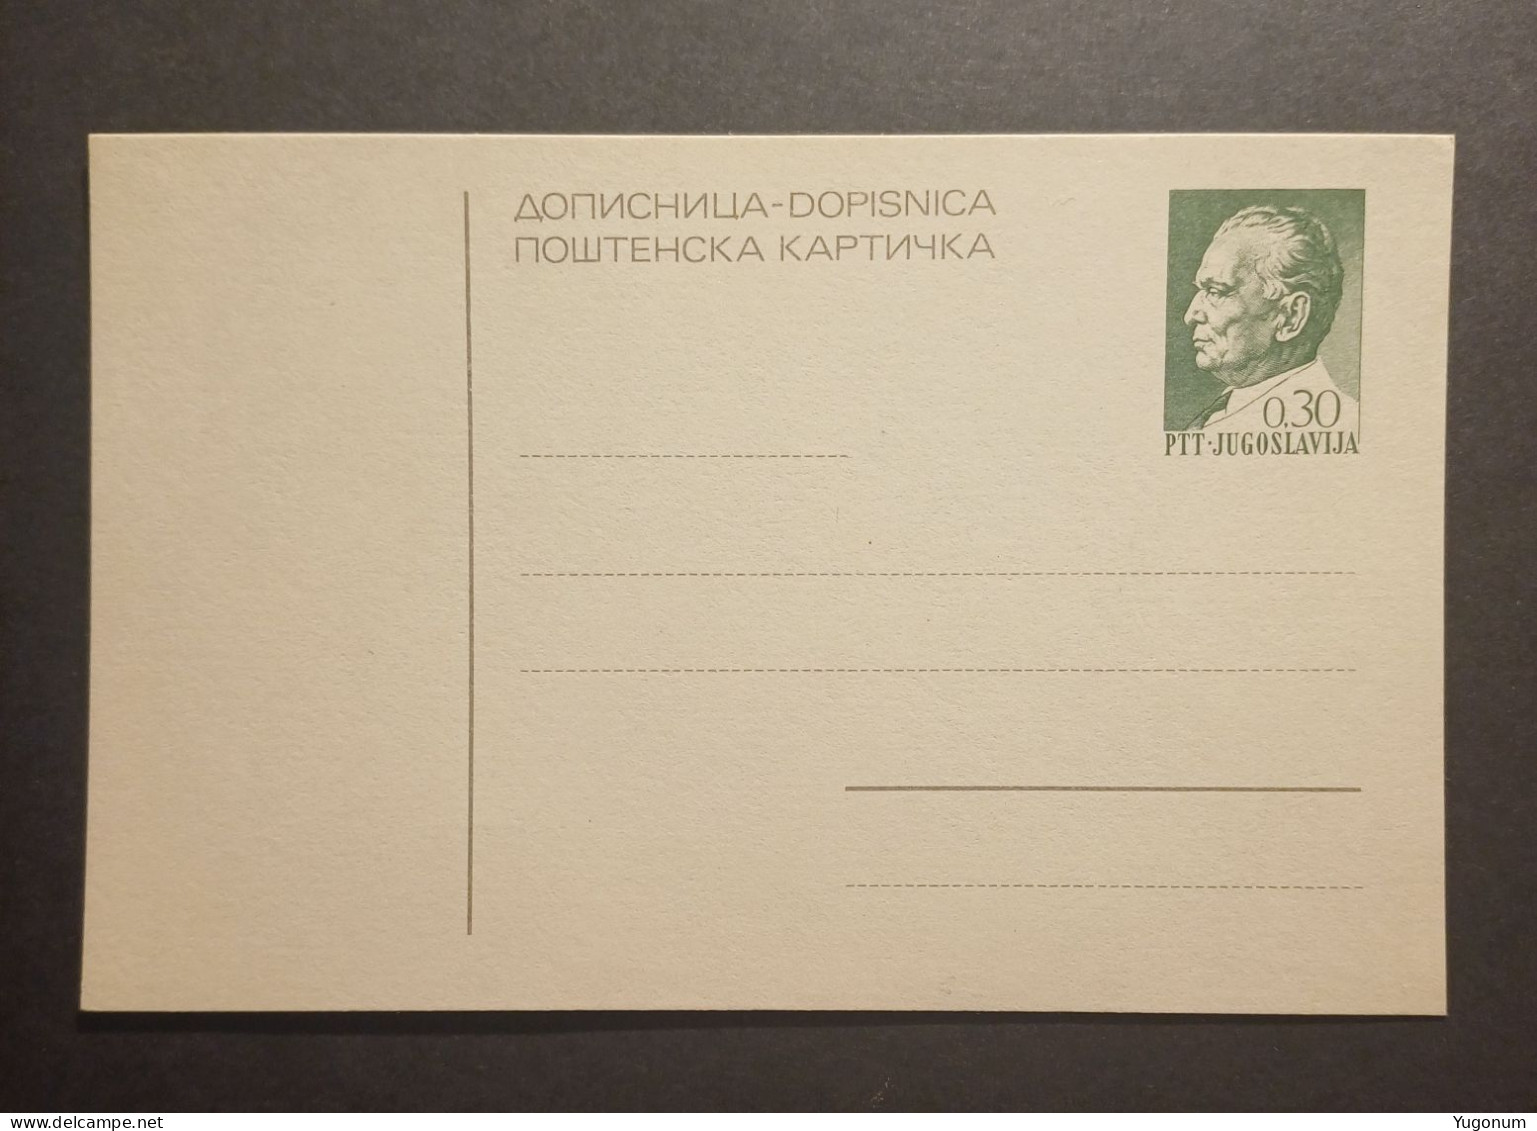 Yugoslavia Slovenia 1970's Unused Stationary Card "dopisnica" With Preprinted 0,30 Dinara Tito Stamp (No 3015) - Covers & Documents